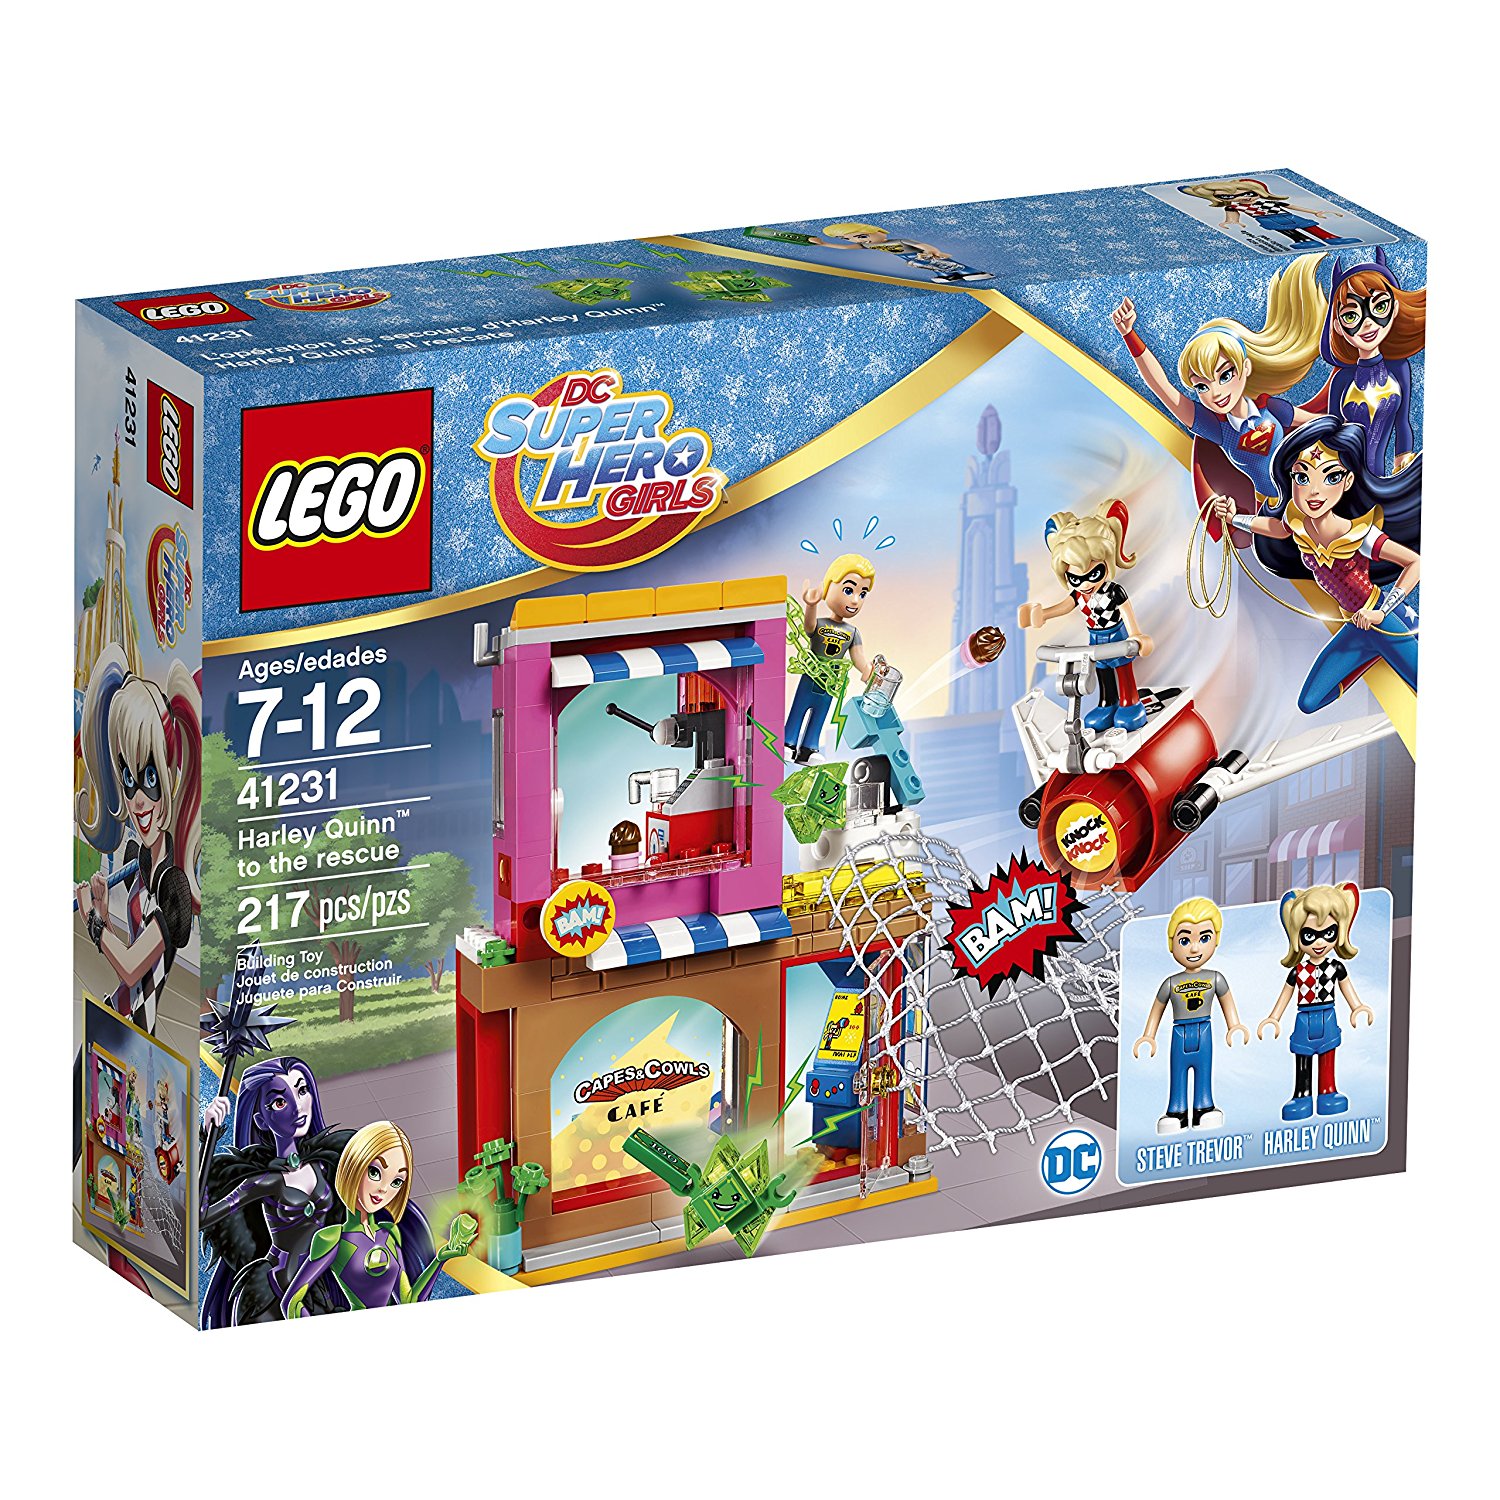 shg004 Nb30 New Lego Lena Luthor From DC super hero girls minifigure Doll 